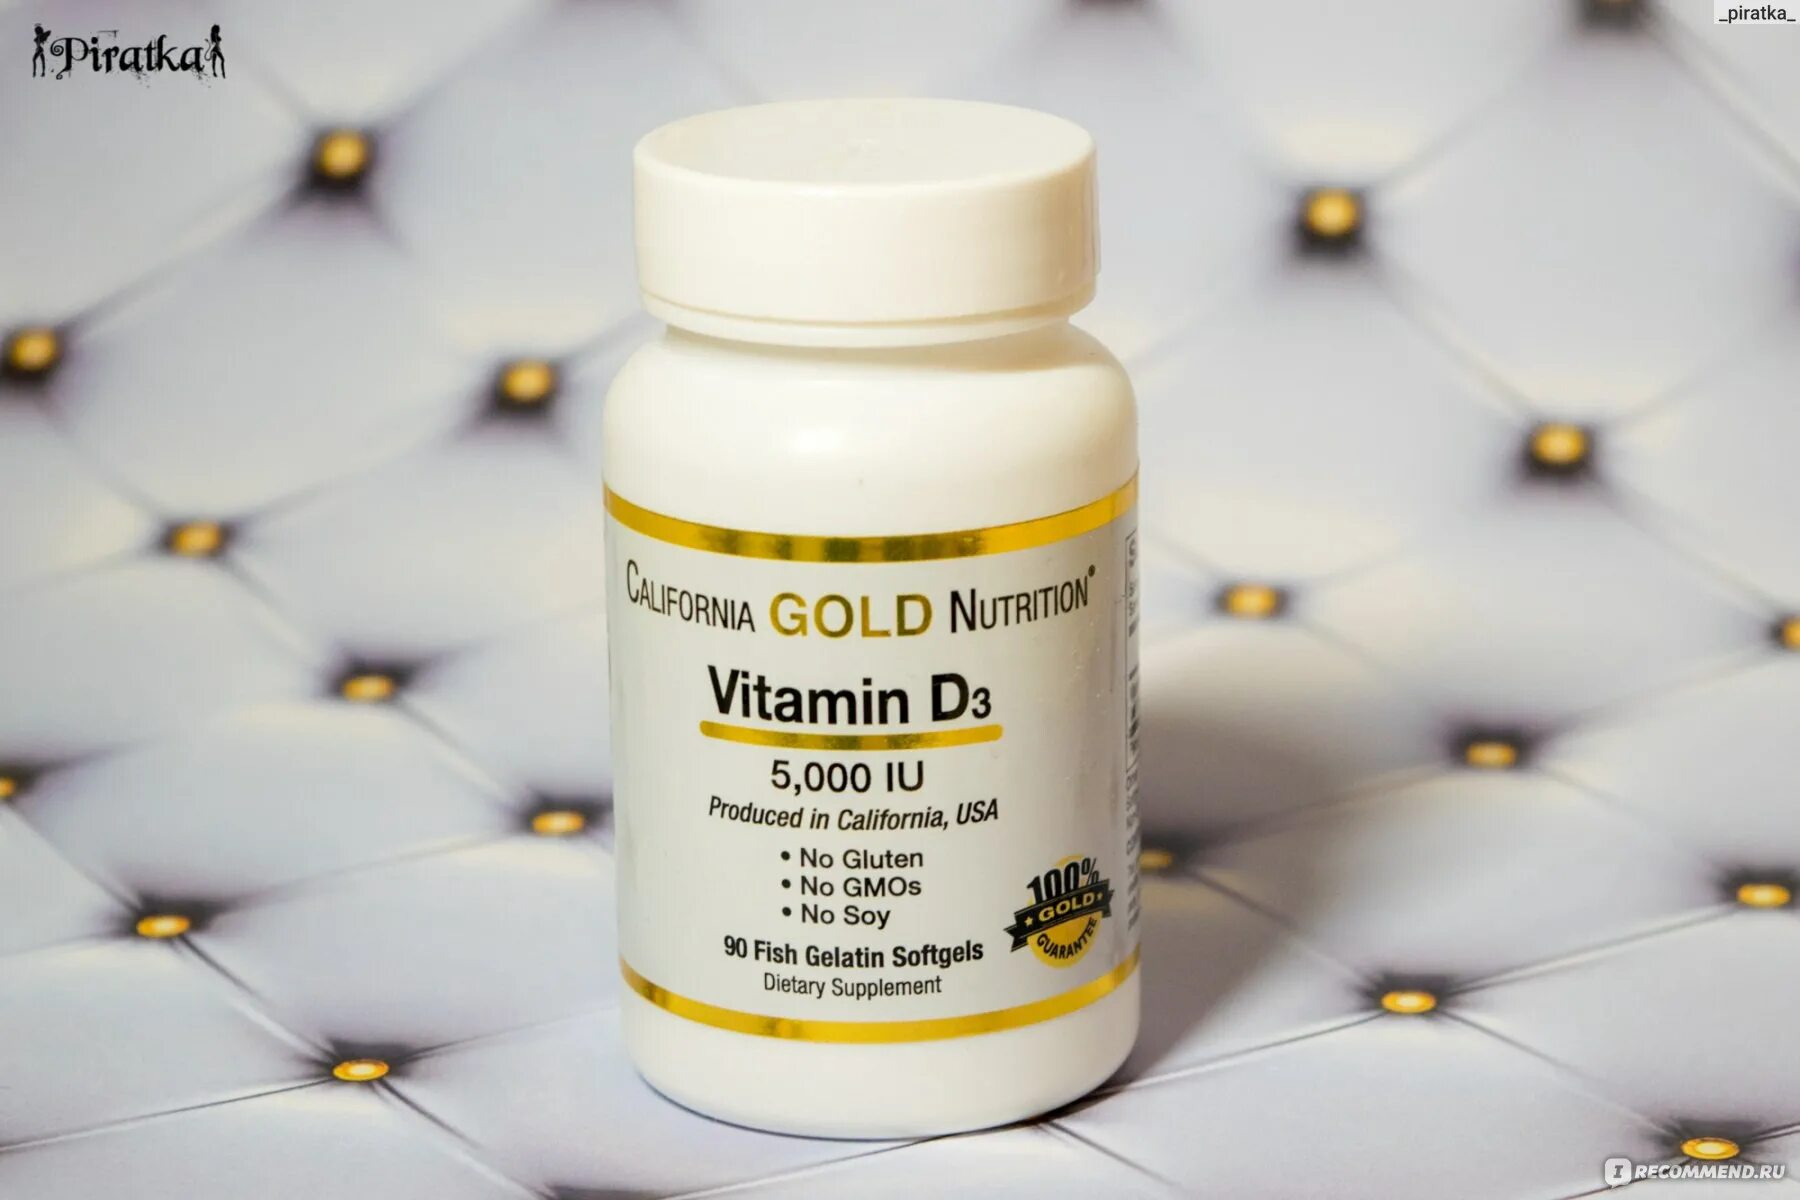 Капсулы California Gold Nutrition Vitamin d3 5000 IU. Витамин д3 5000 ме. Калифорния Голд Нутритион витамин д3 90 капсул 2000. Витамин д3 California Gold 5000.